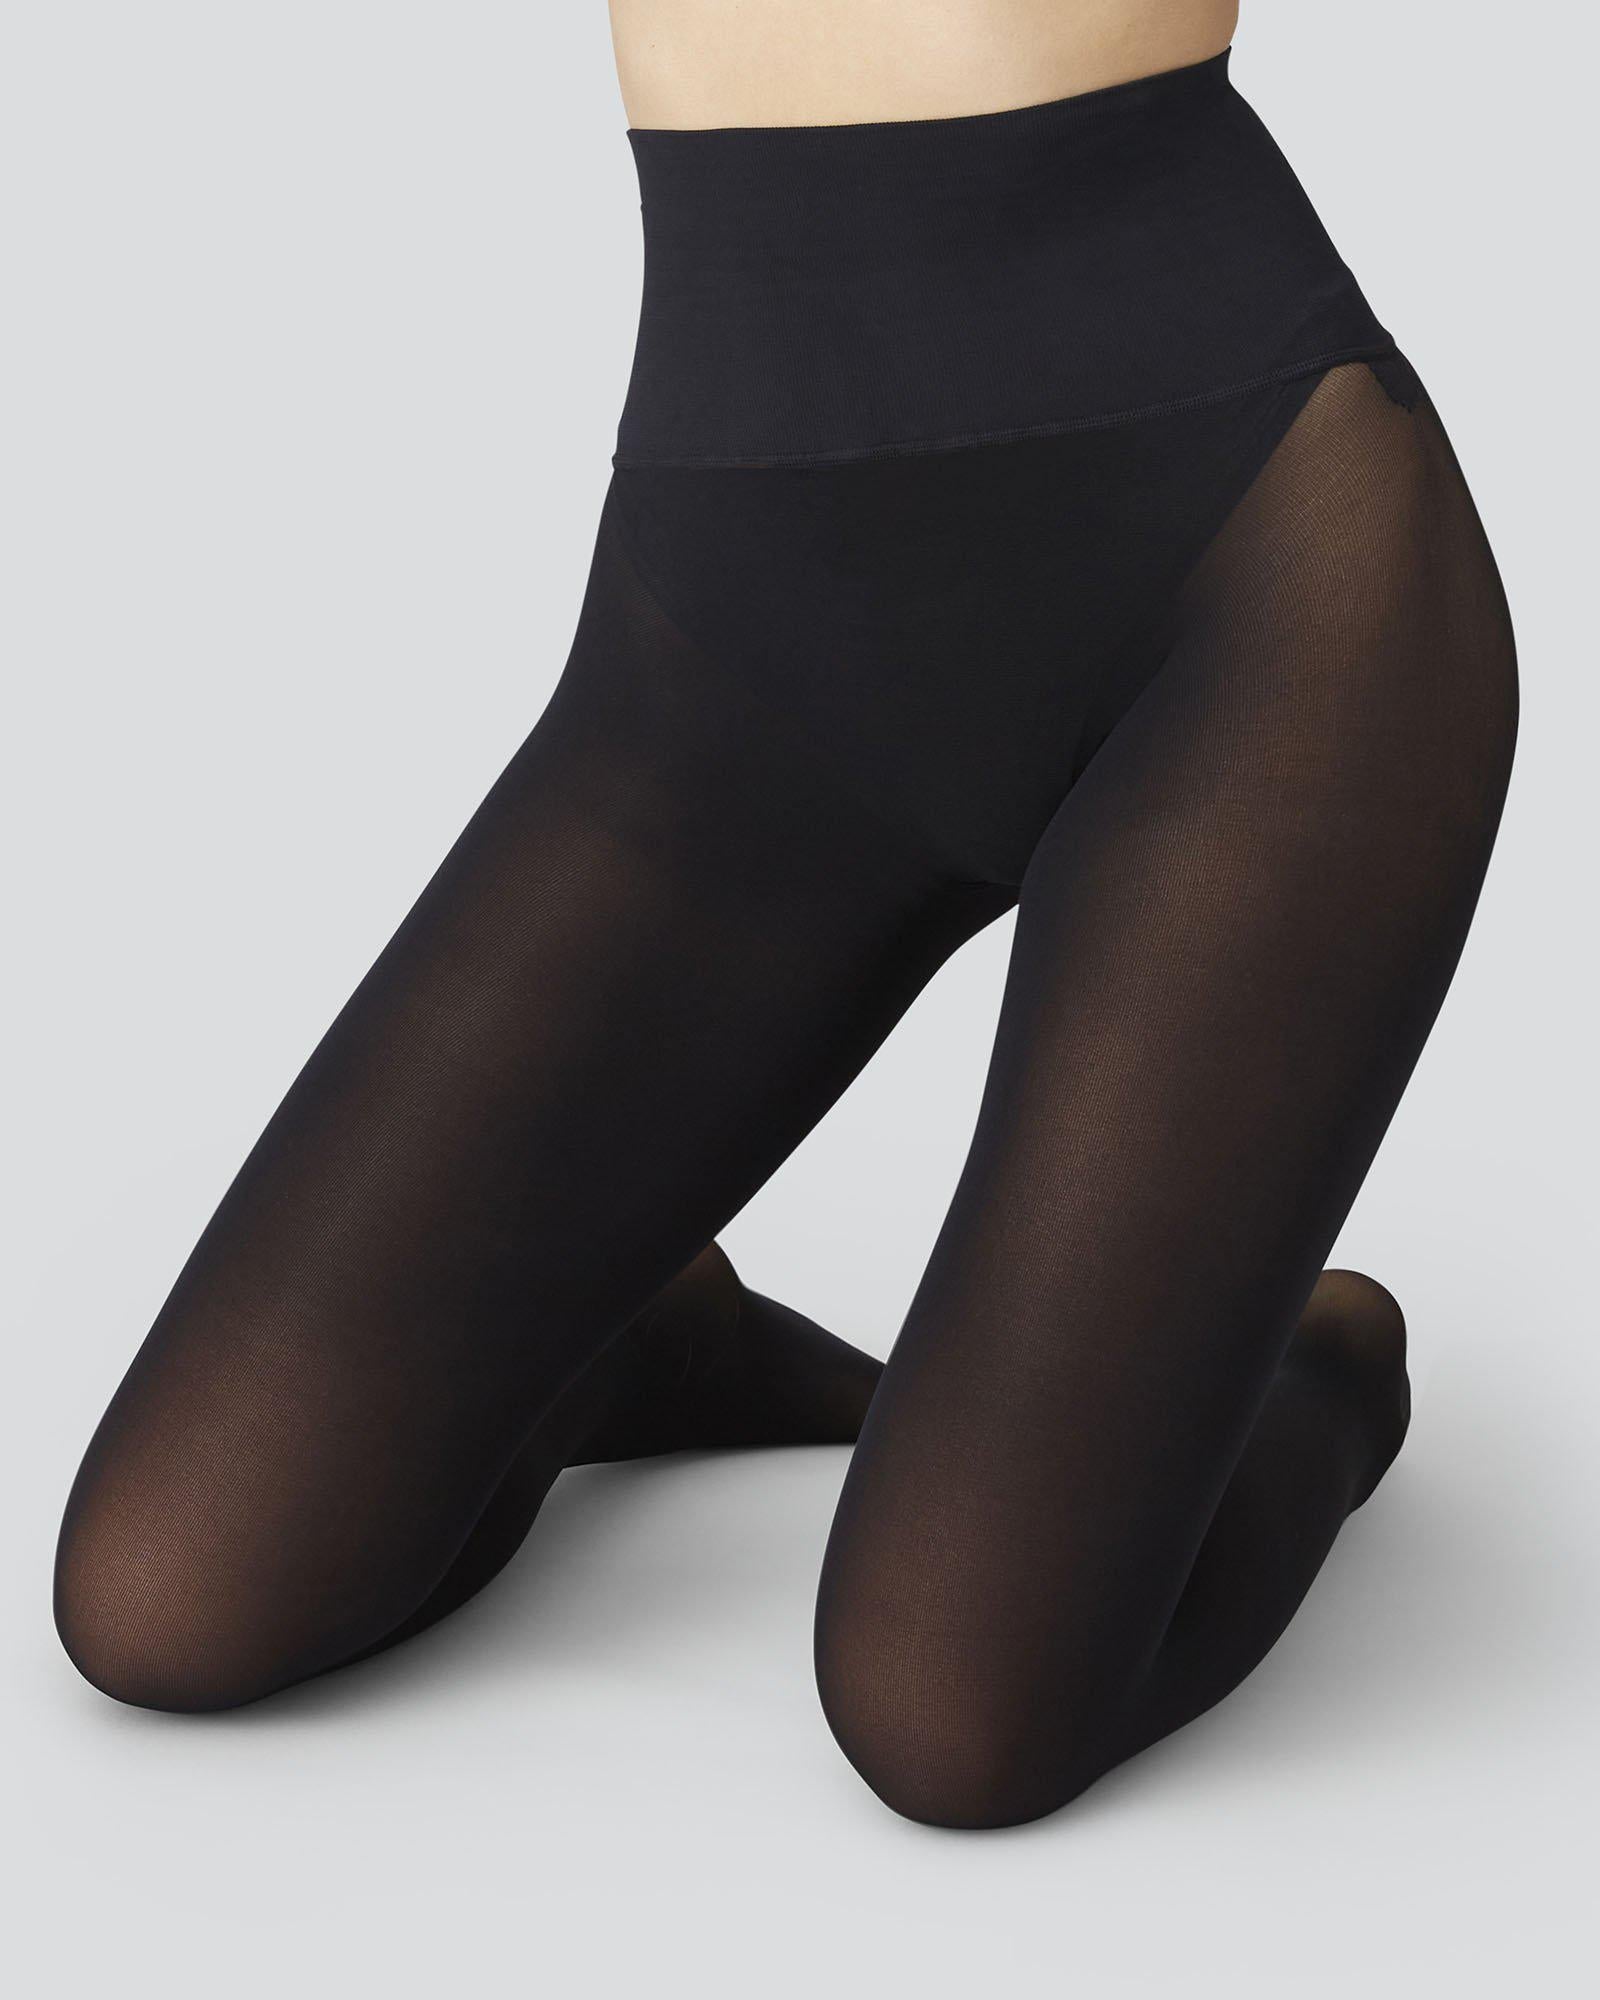 Mialoley Women's Stockings, Love Printing, Hollow Mesh Design, High  Elasticity, Slimming Black Tights 